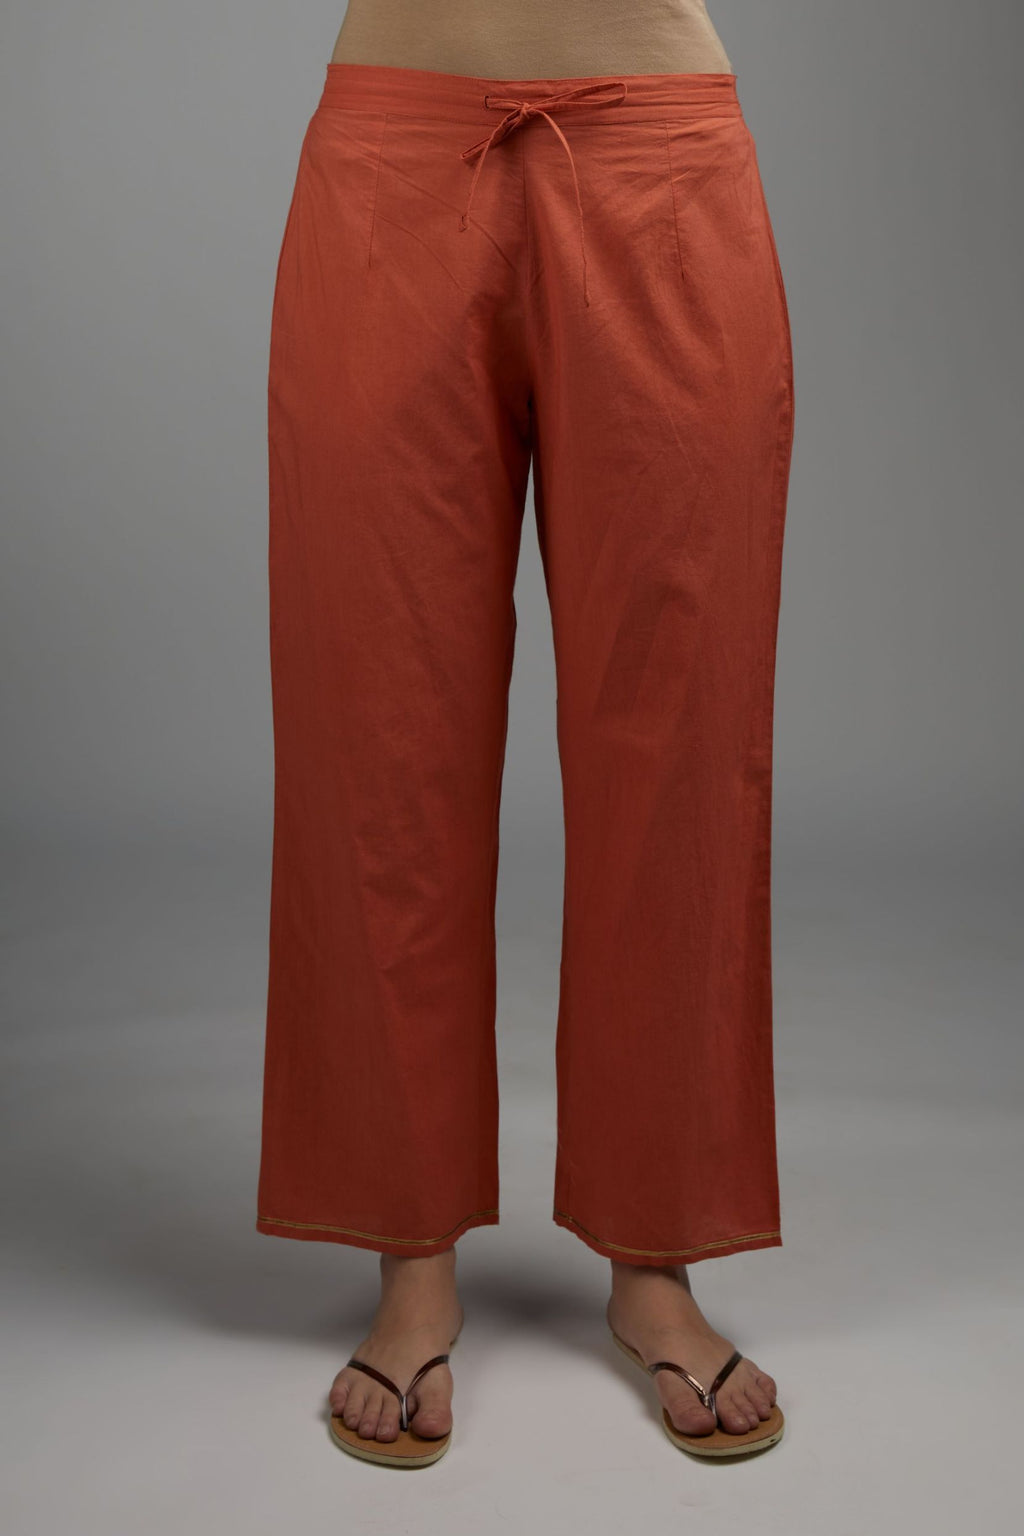 Rust straight cotton pants with single gota line detailing at hem